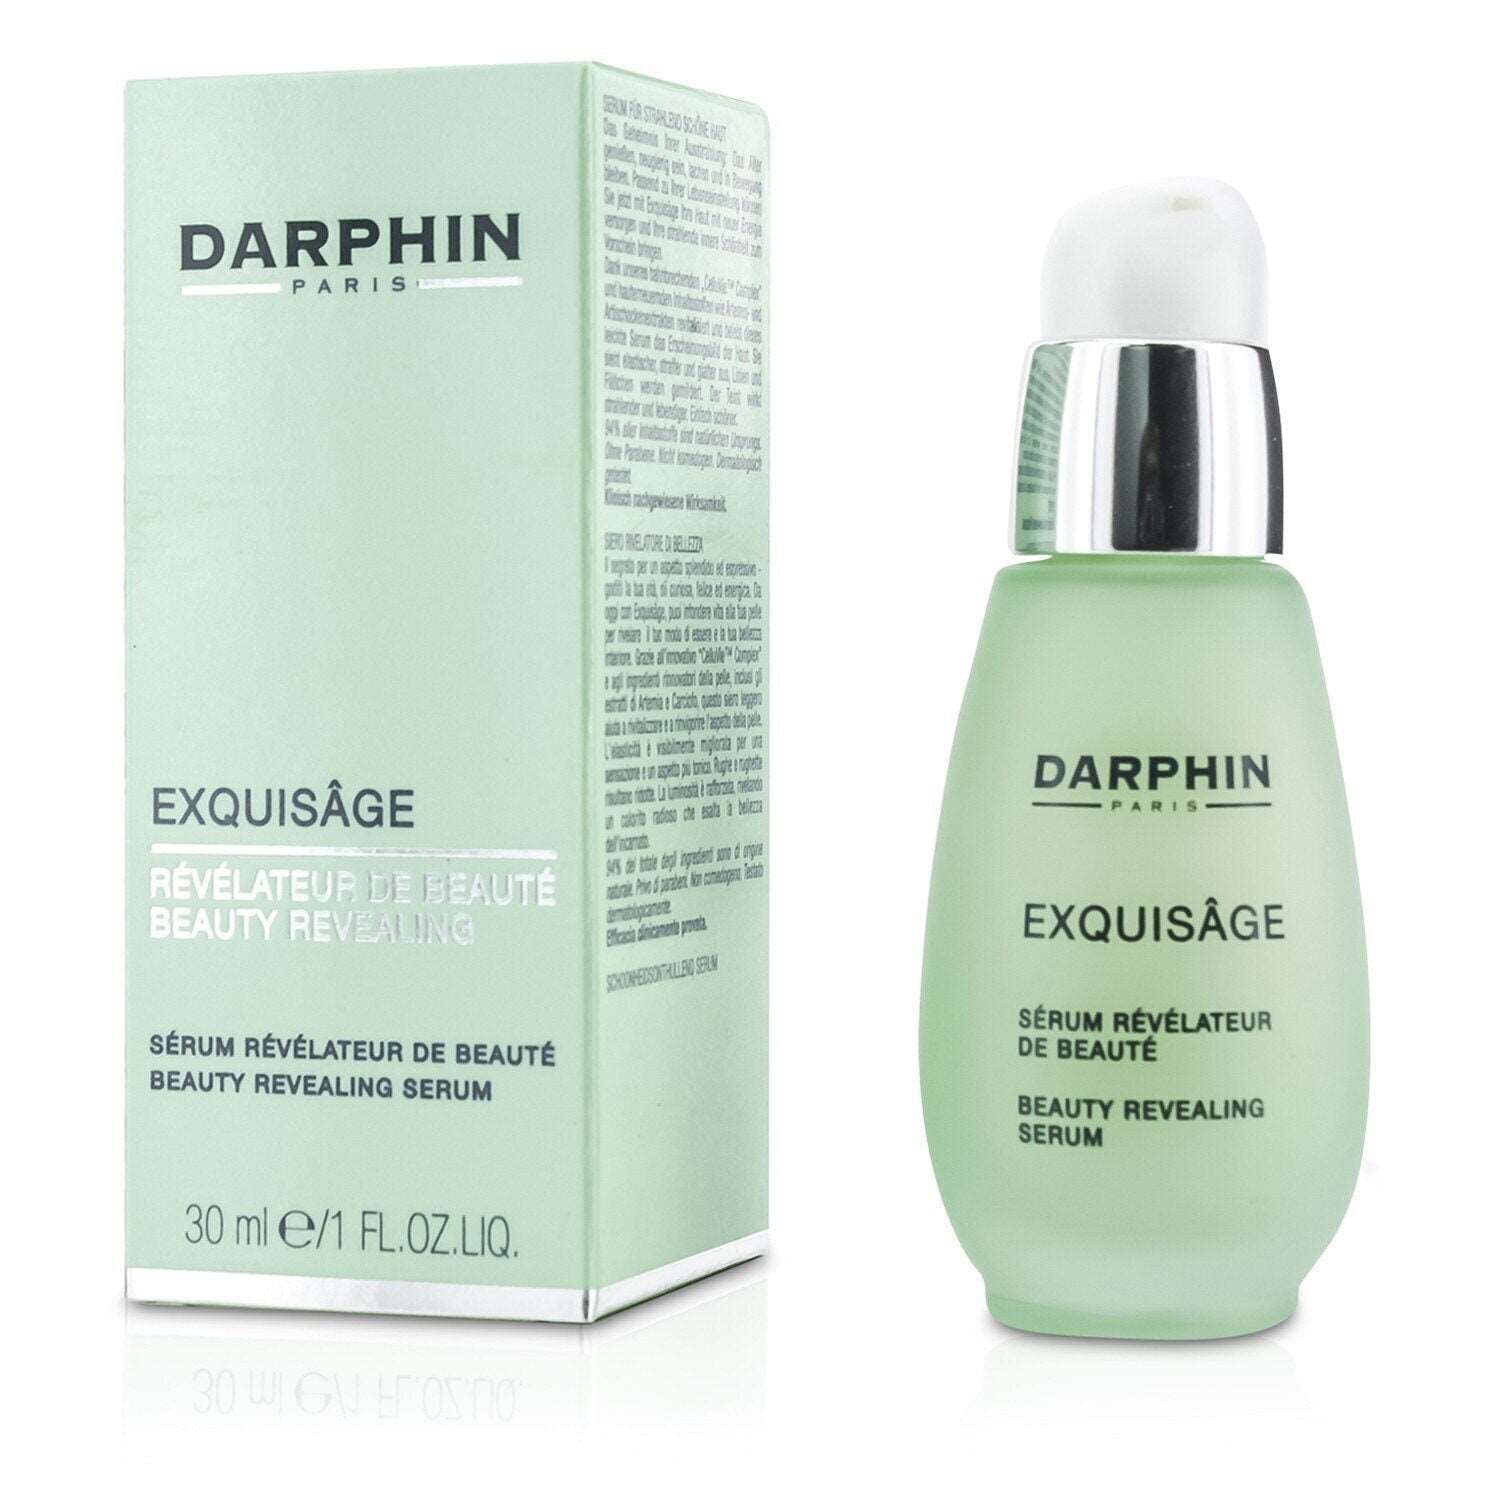 Darphin - Exquisage Beauty Revealing Serum - 30ml/1oz 3P's Inclusive Beauty